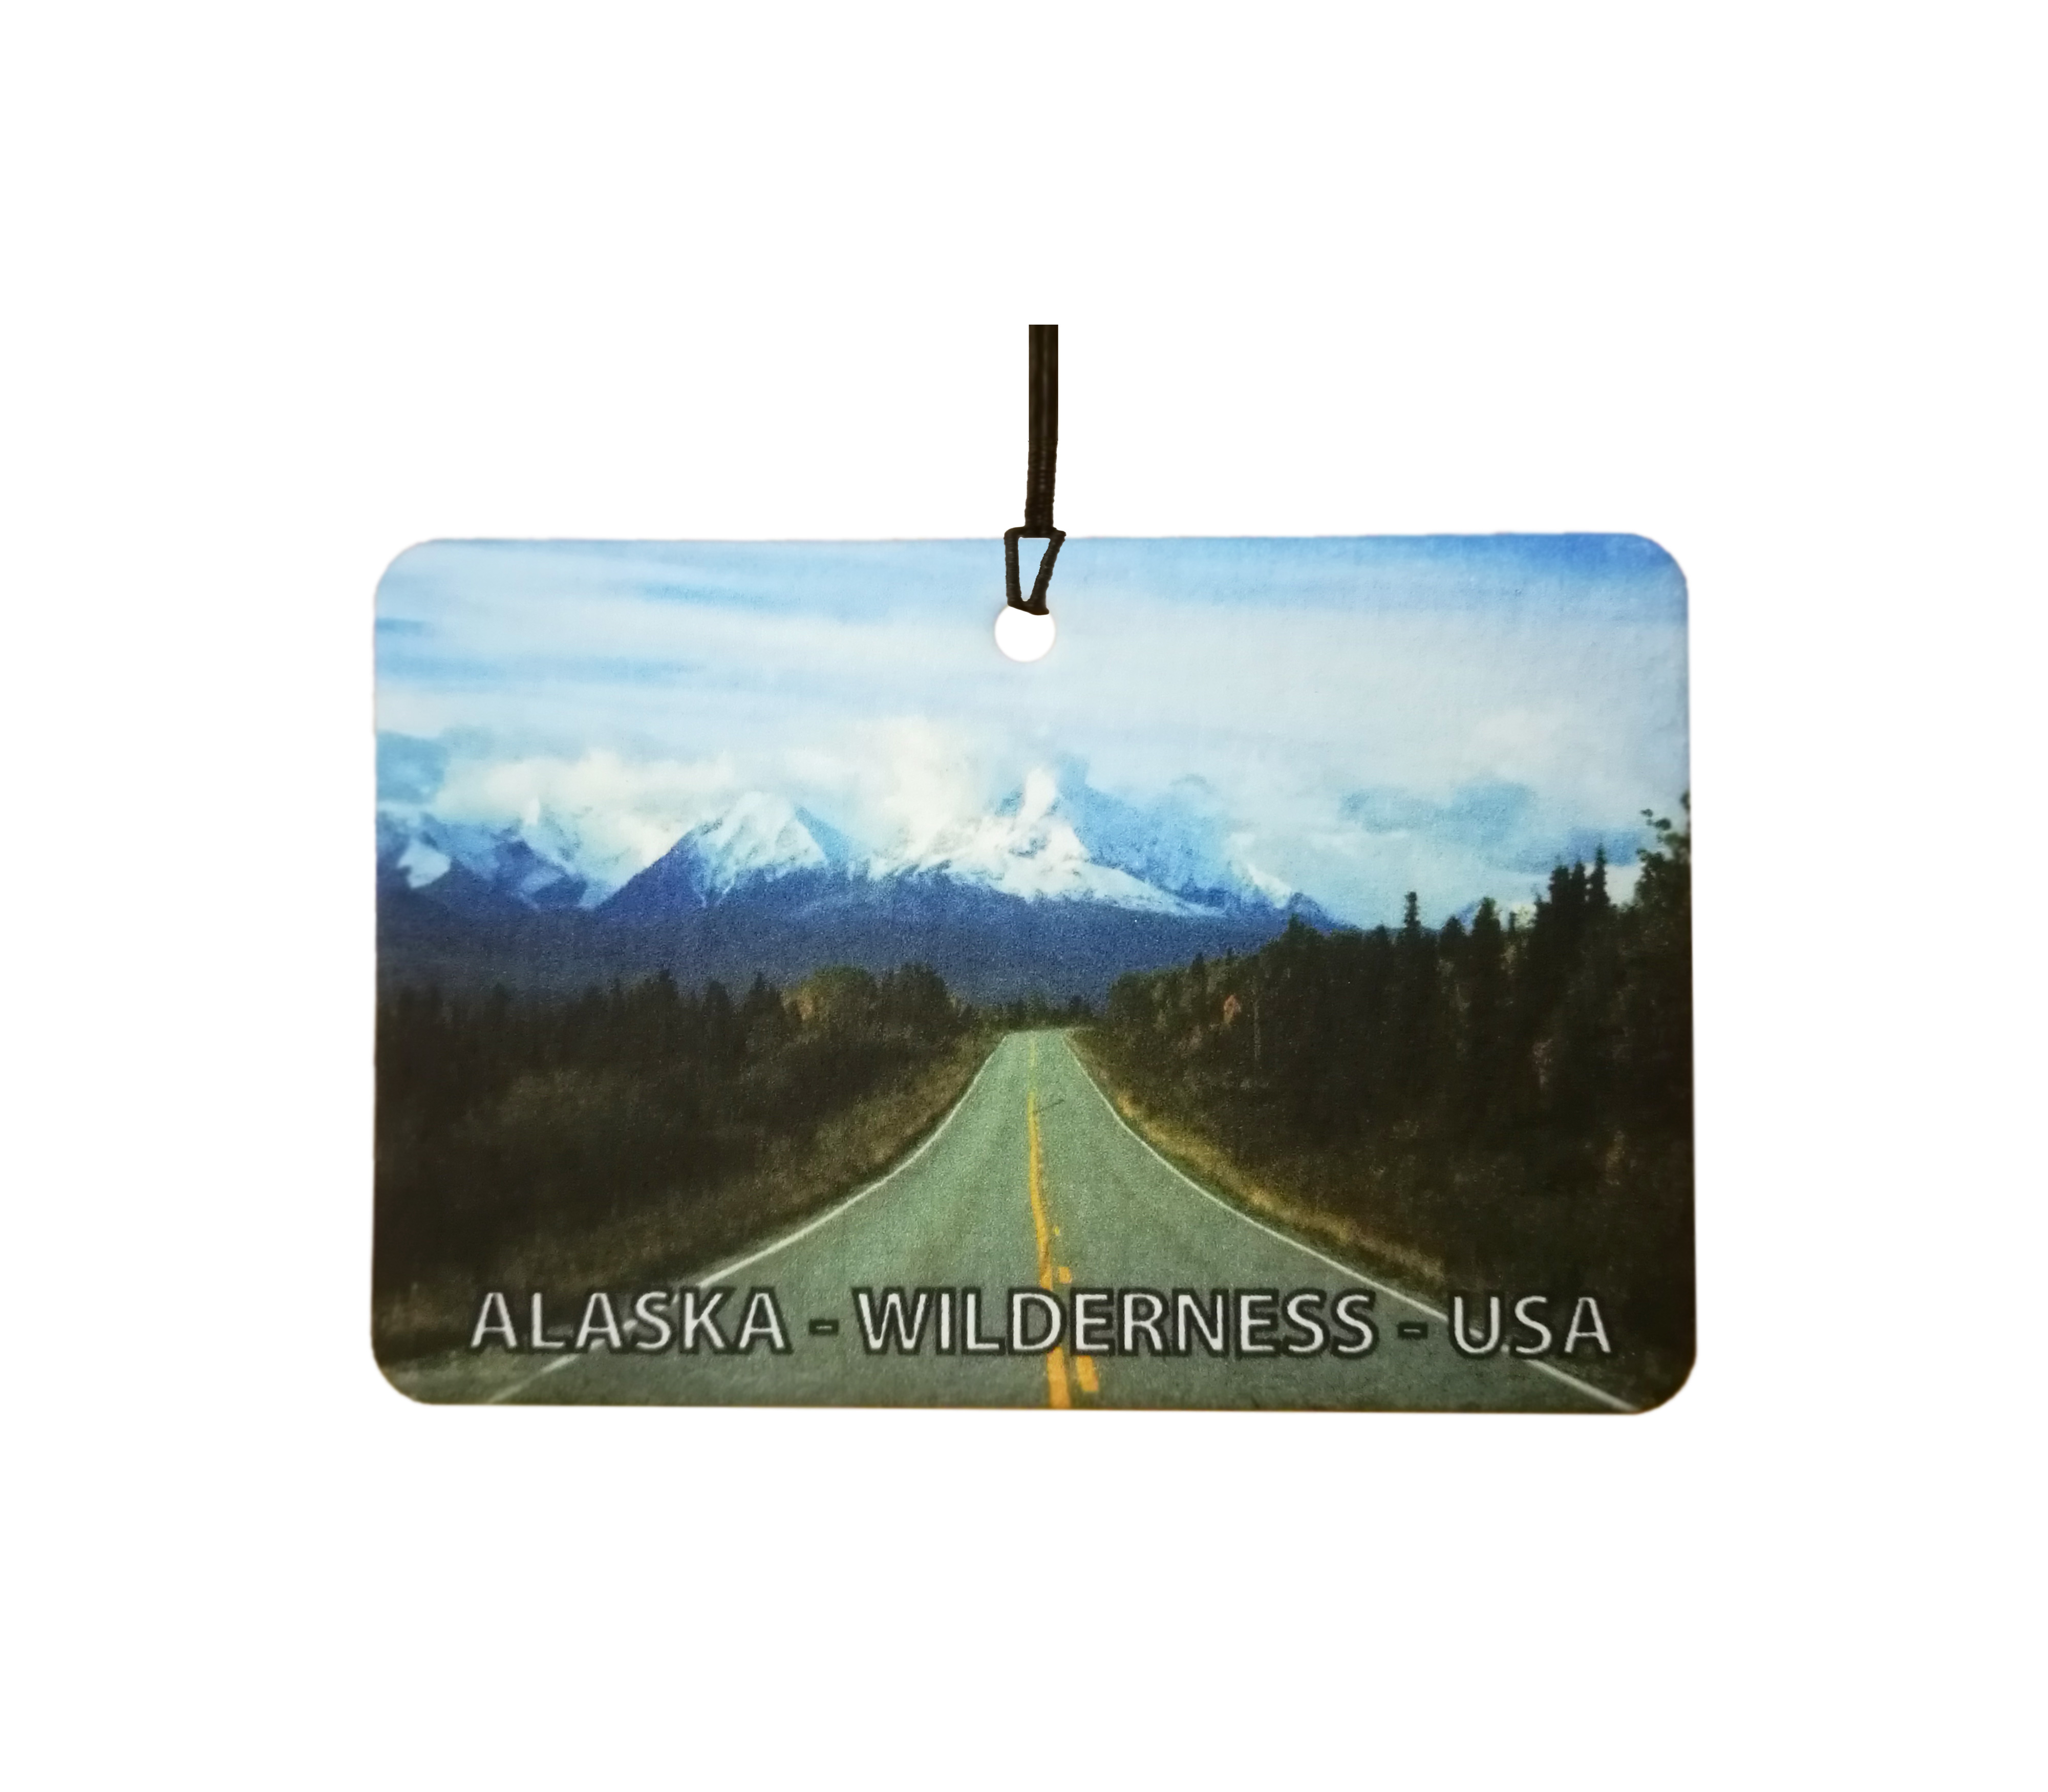 Alaska - Wilderness - USA